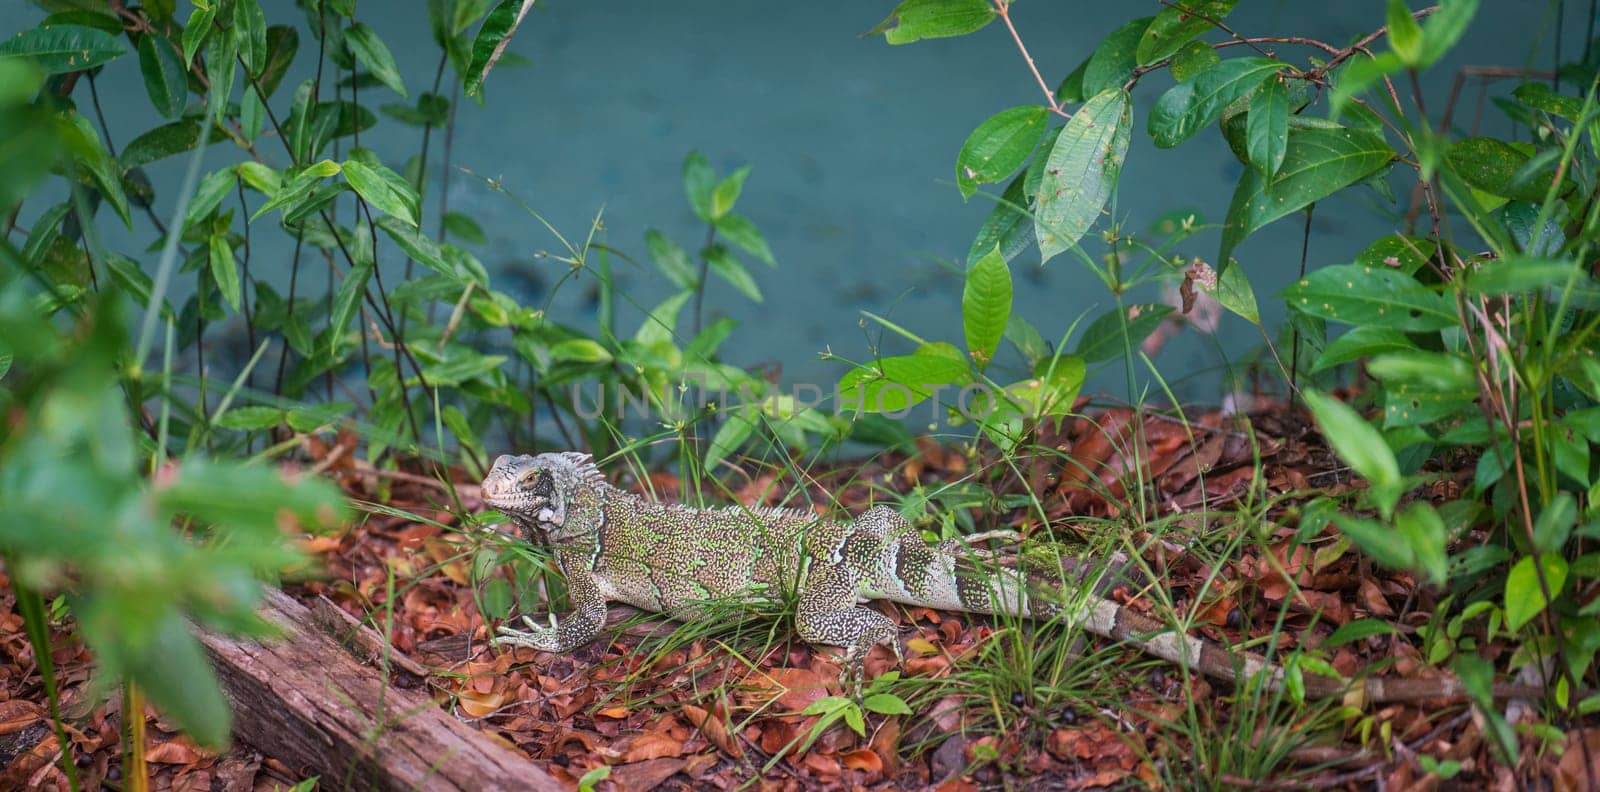 Iguana Walking on Brown Leaves of Tropical Rainforest near Green River. by FerradalFCG